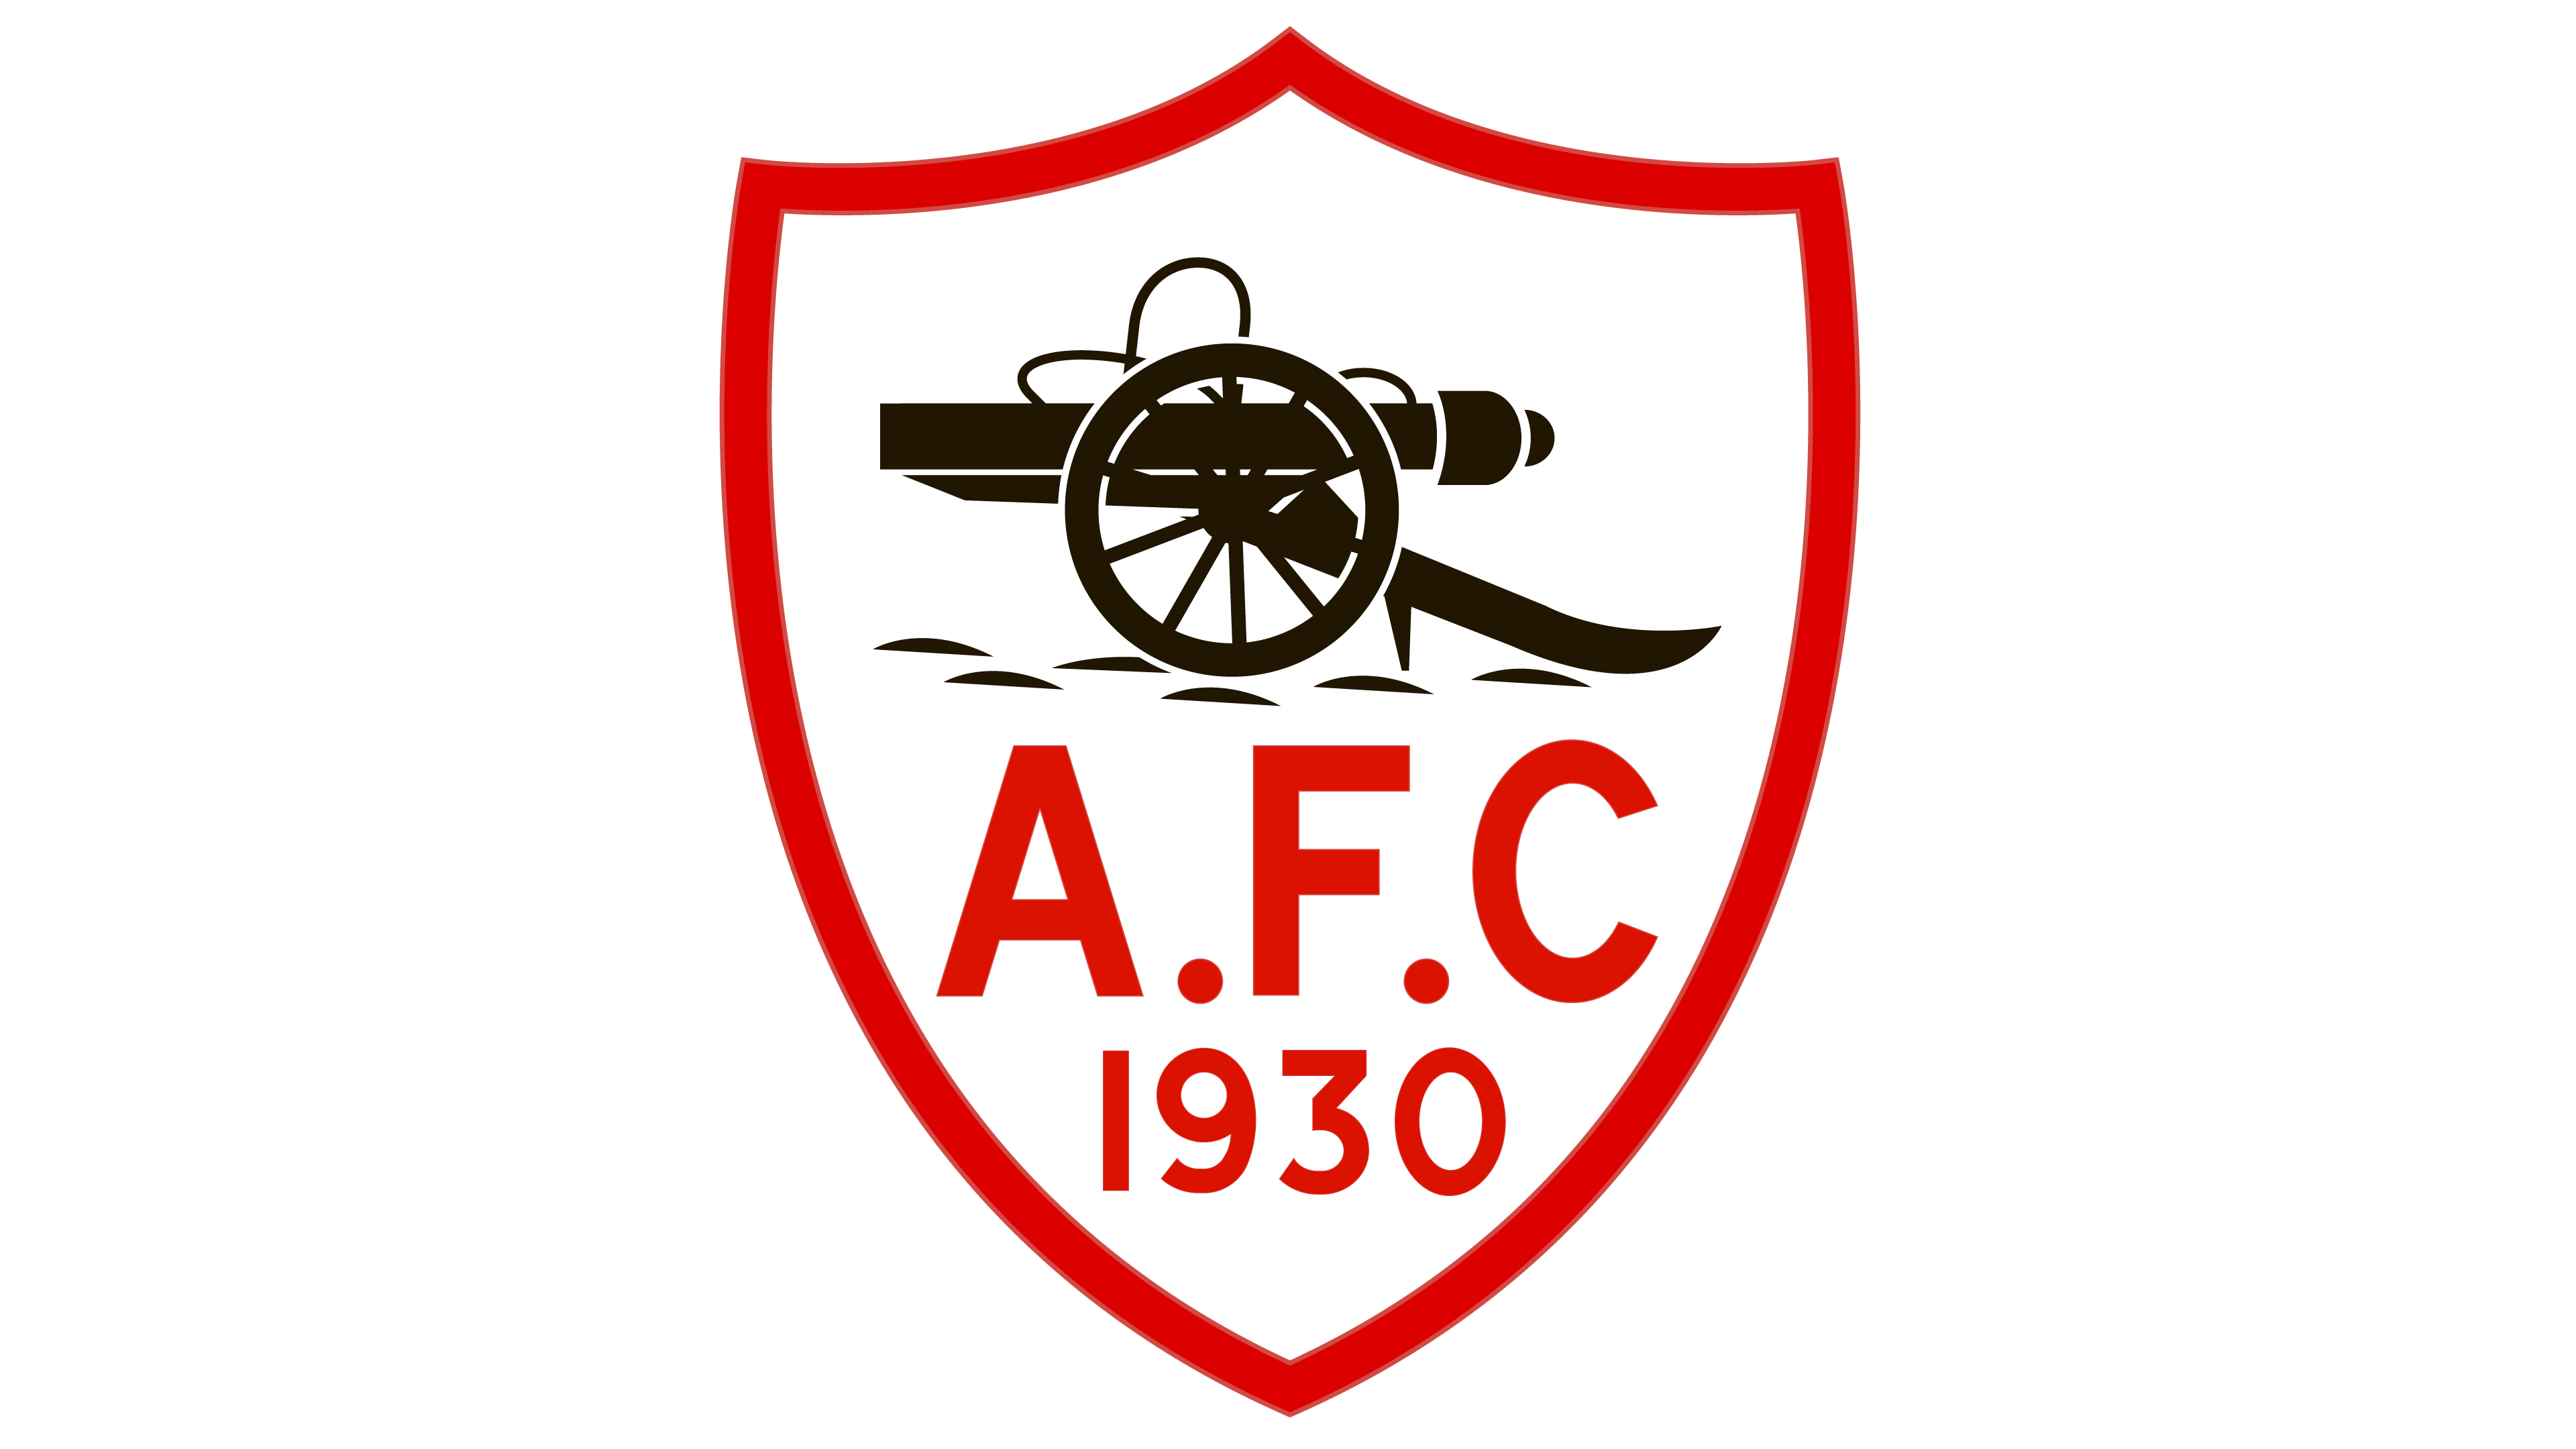 Arsenal Logo Vector at Vectorified.com | Collection of ...